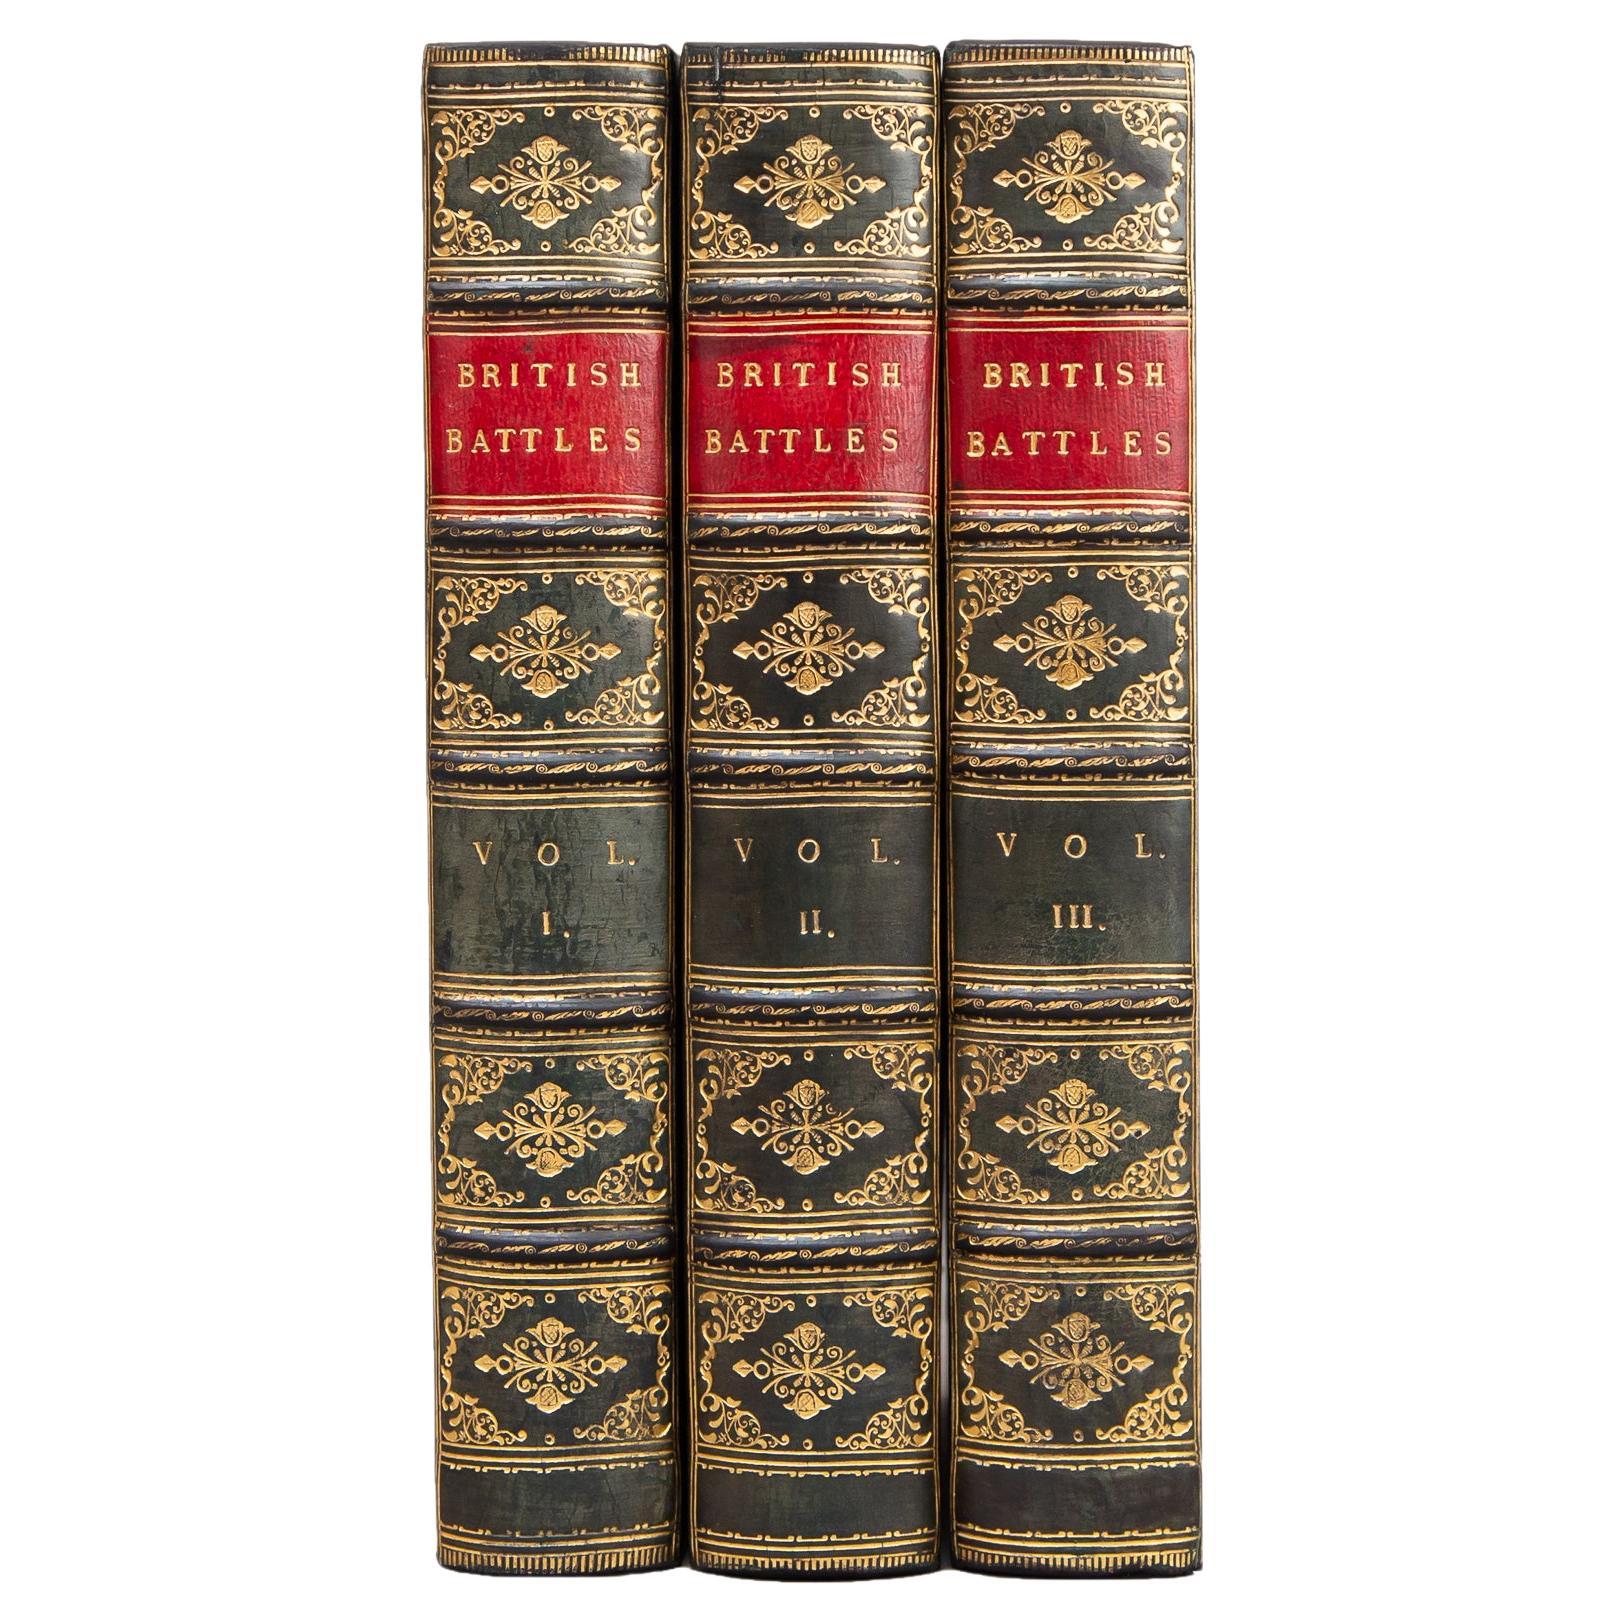 3 Volumes, James Grant, British Battles